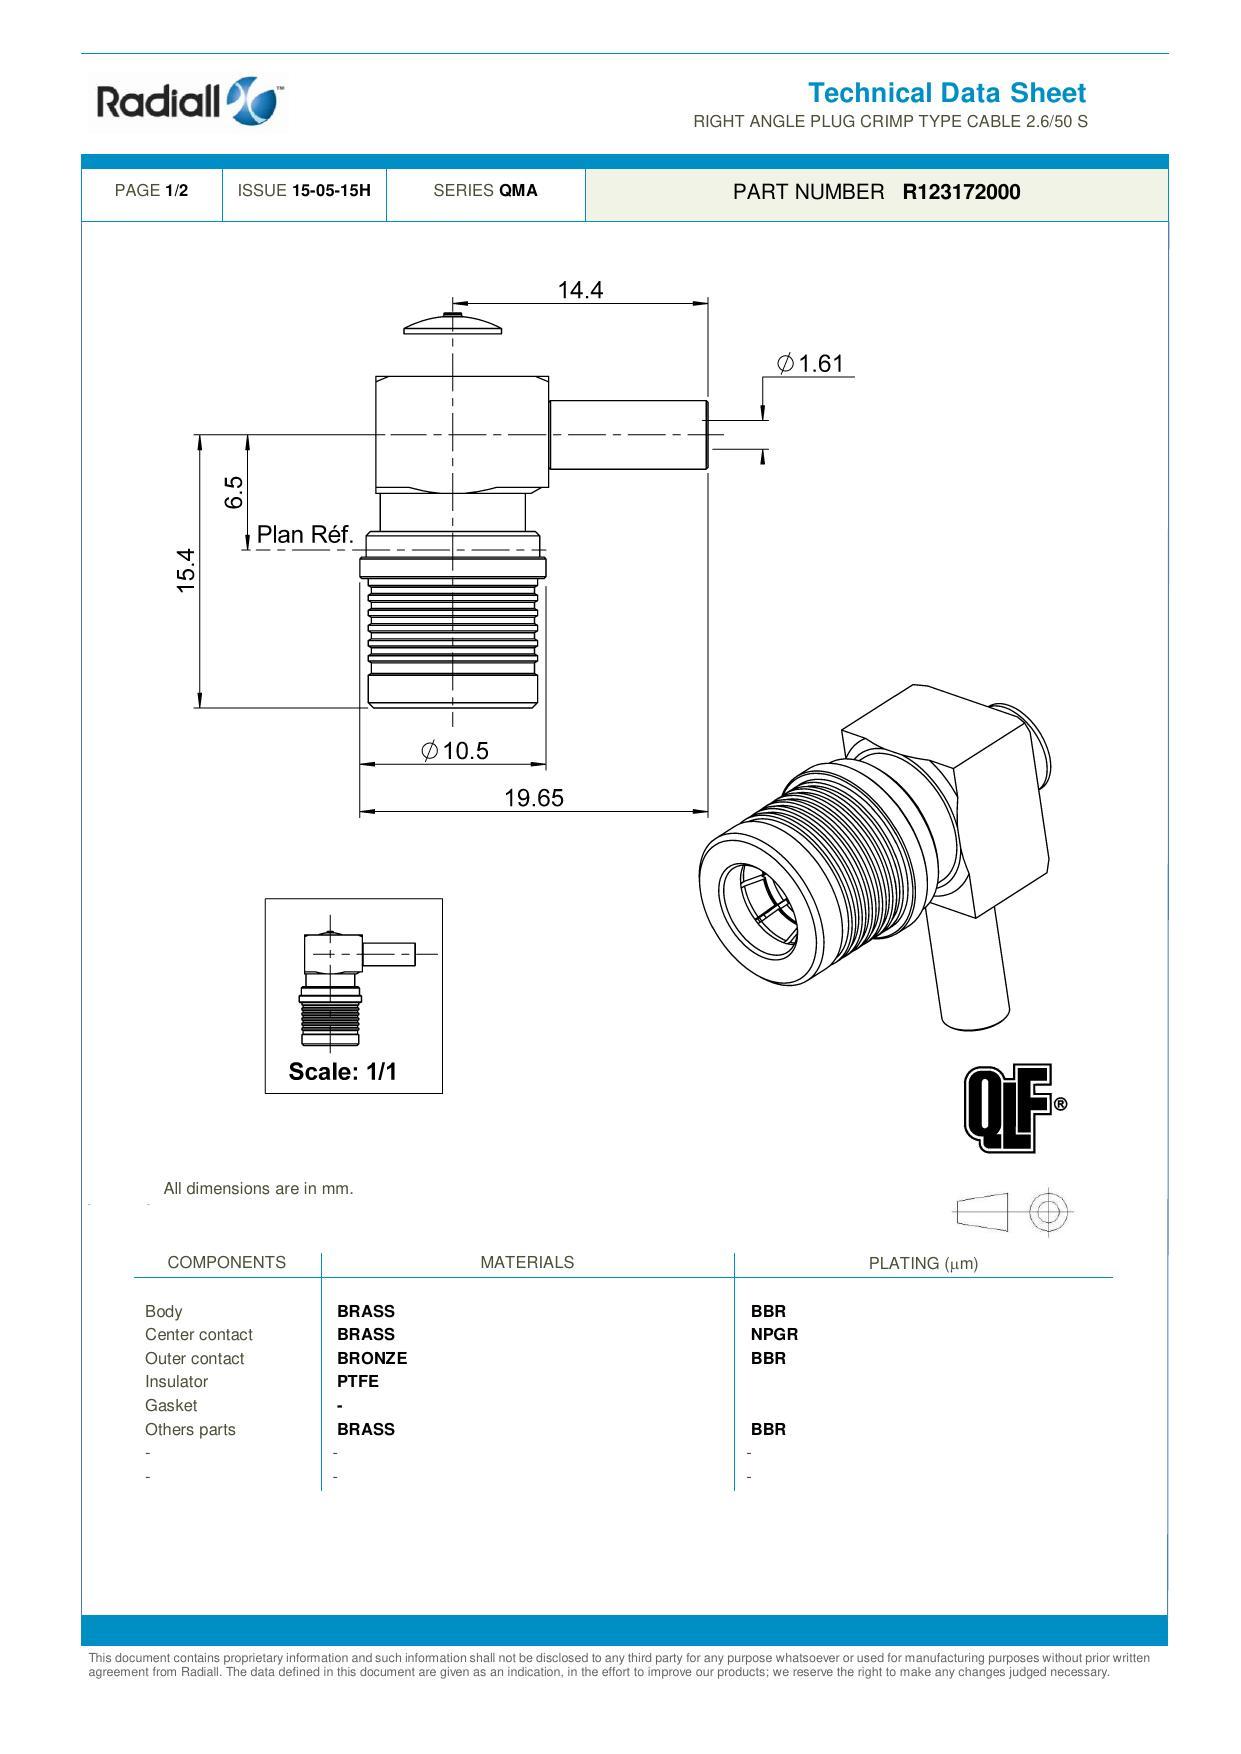 right-angle-plug-crimp-type-cable-2650-s.pdf